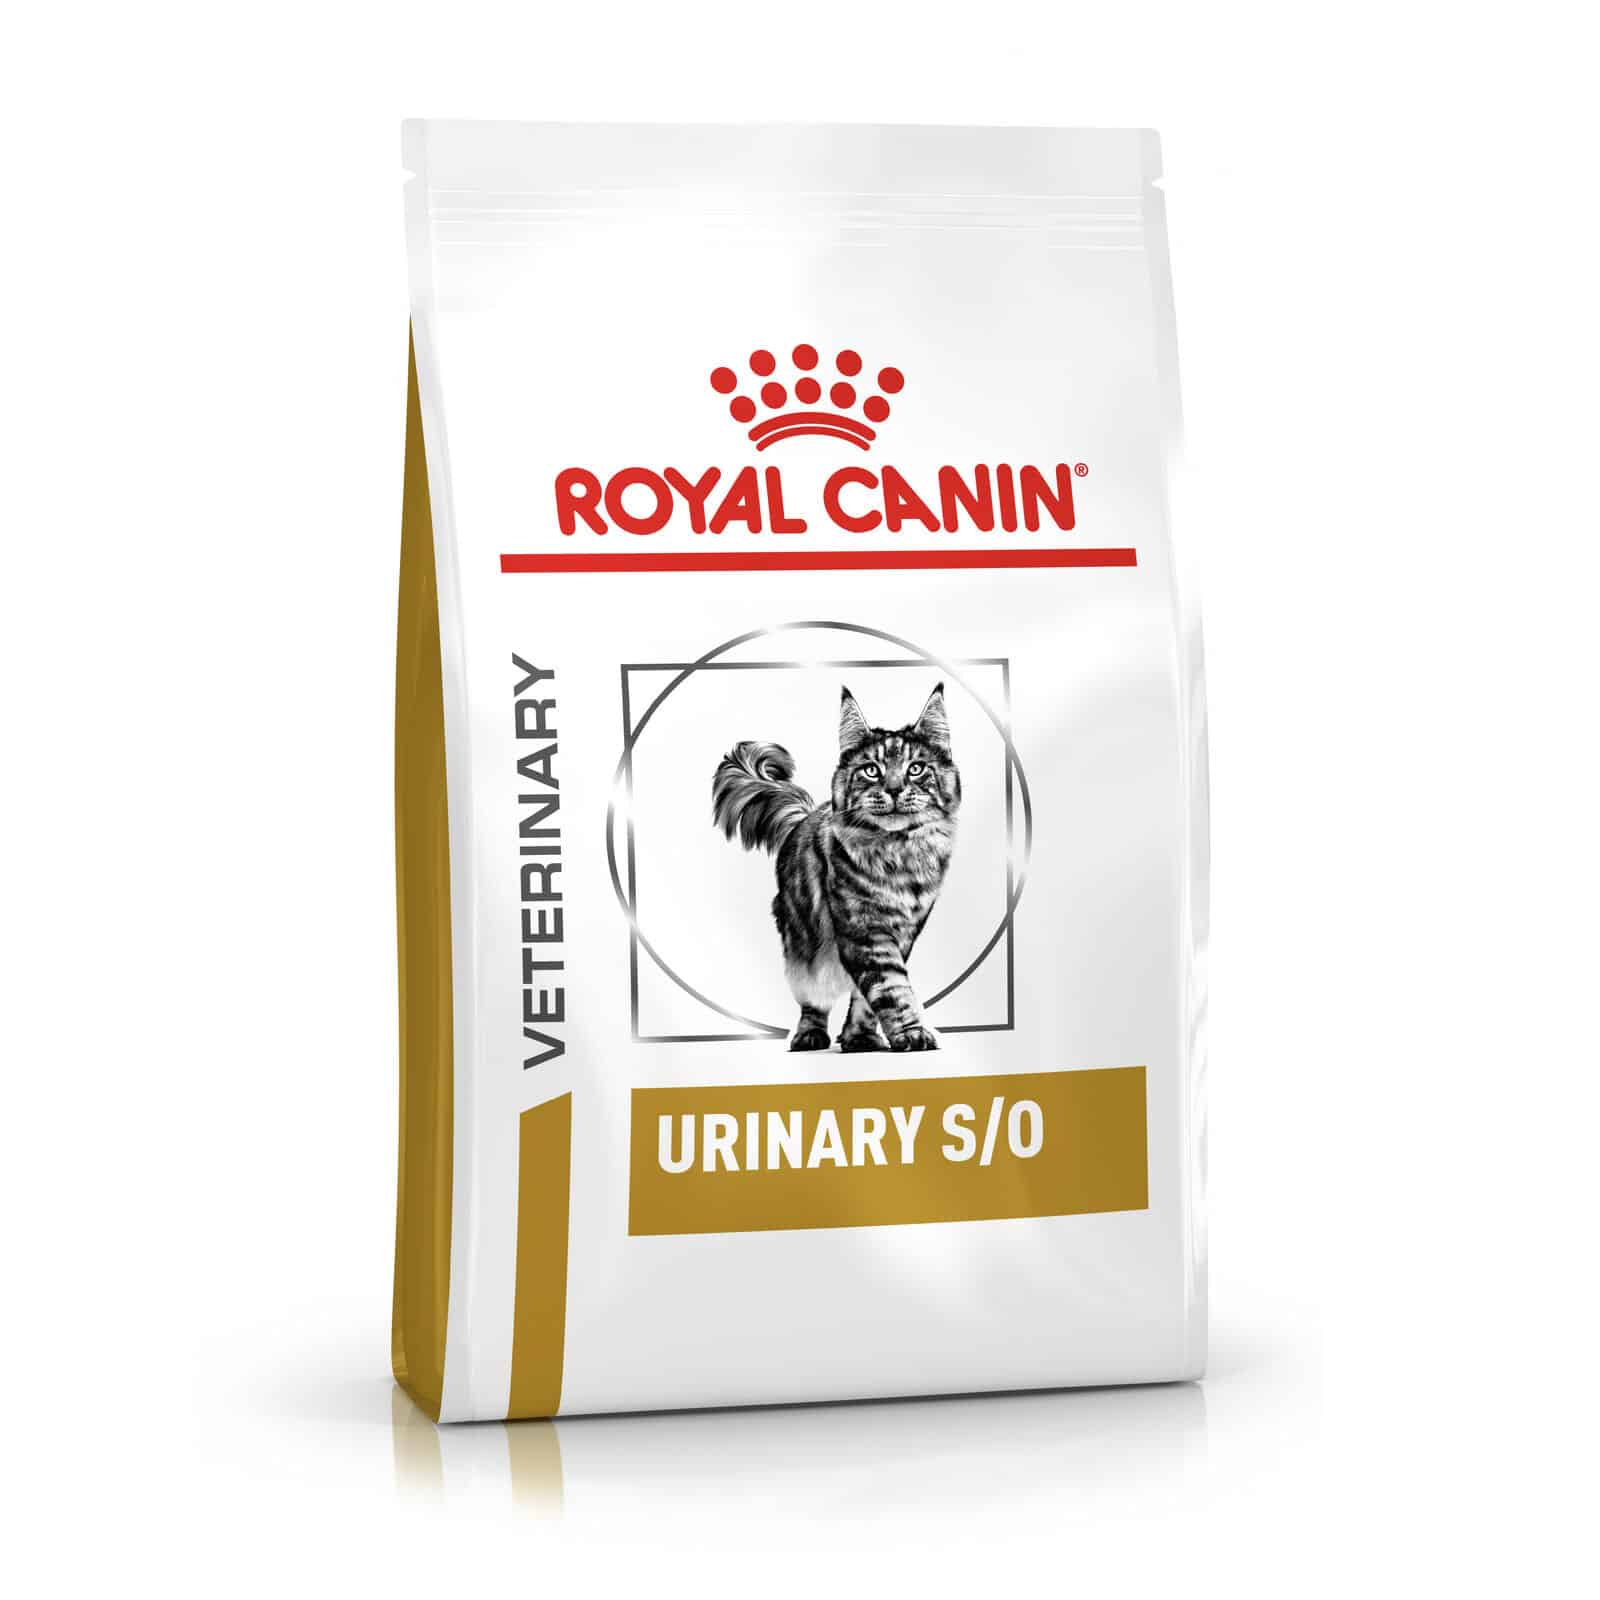 Royal Canin Cat Veterinary Dry Food Urinary S/O, 1.5 kg